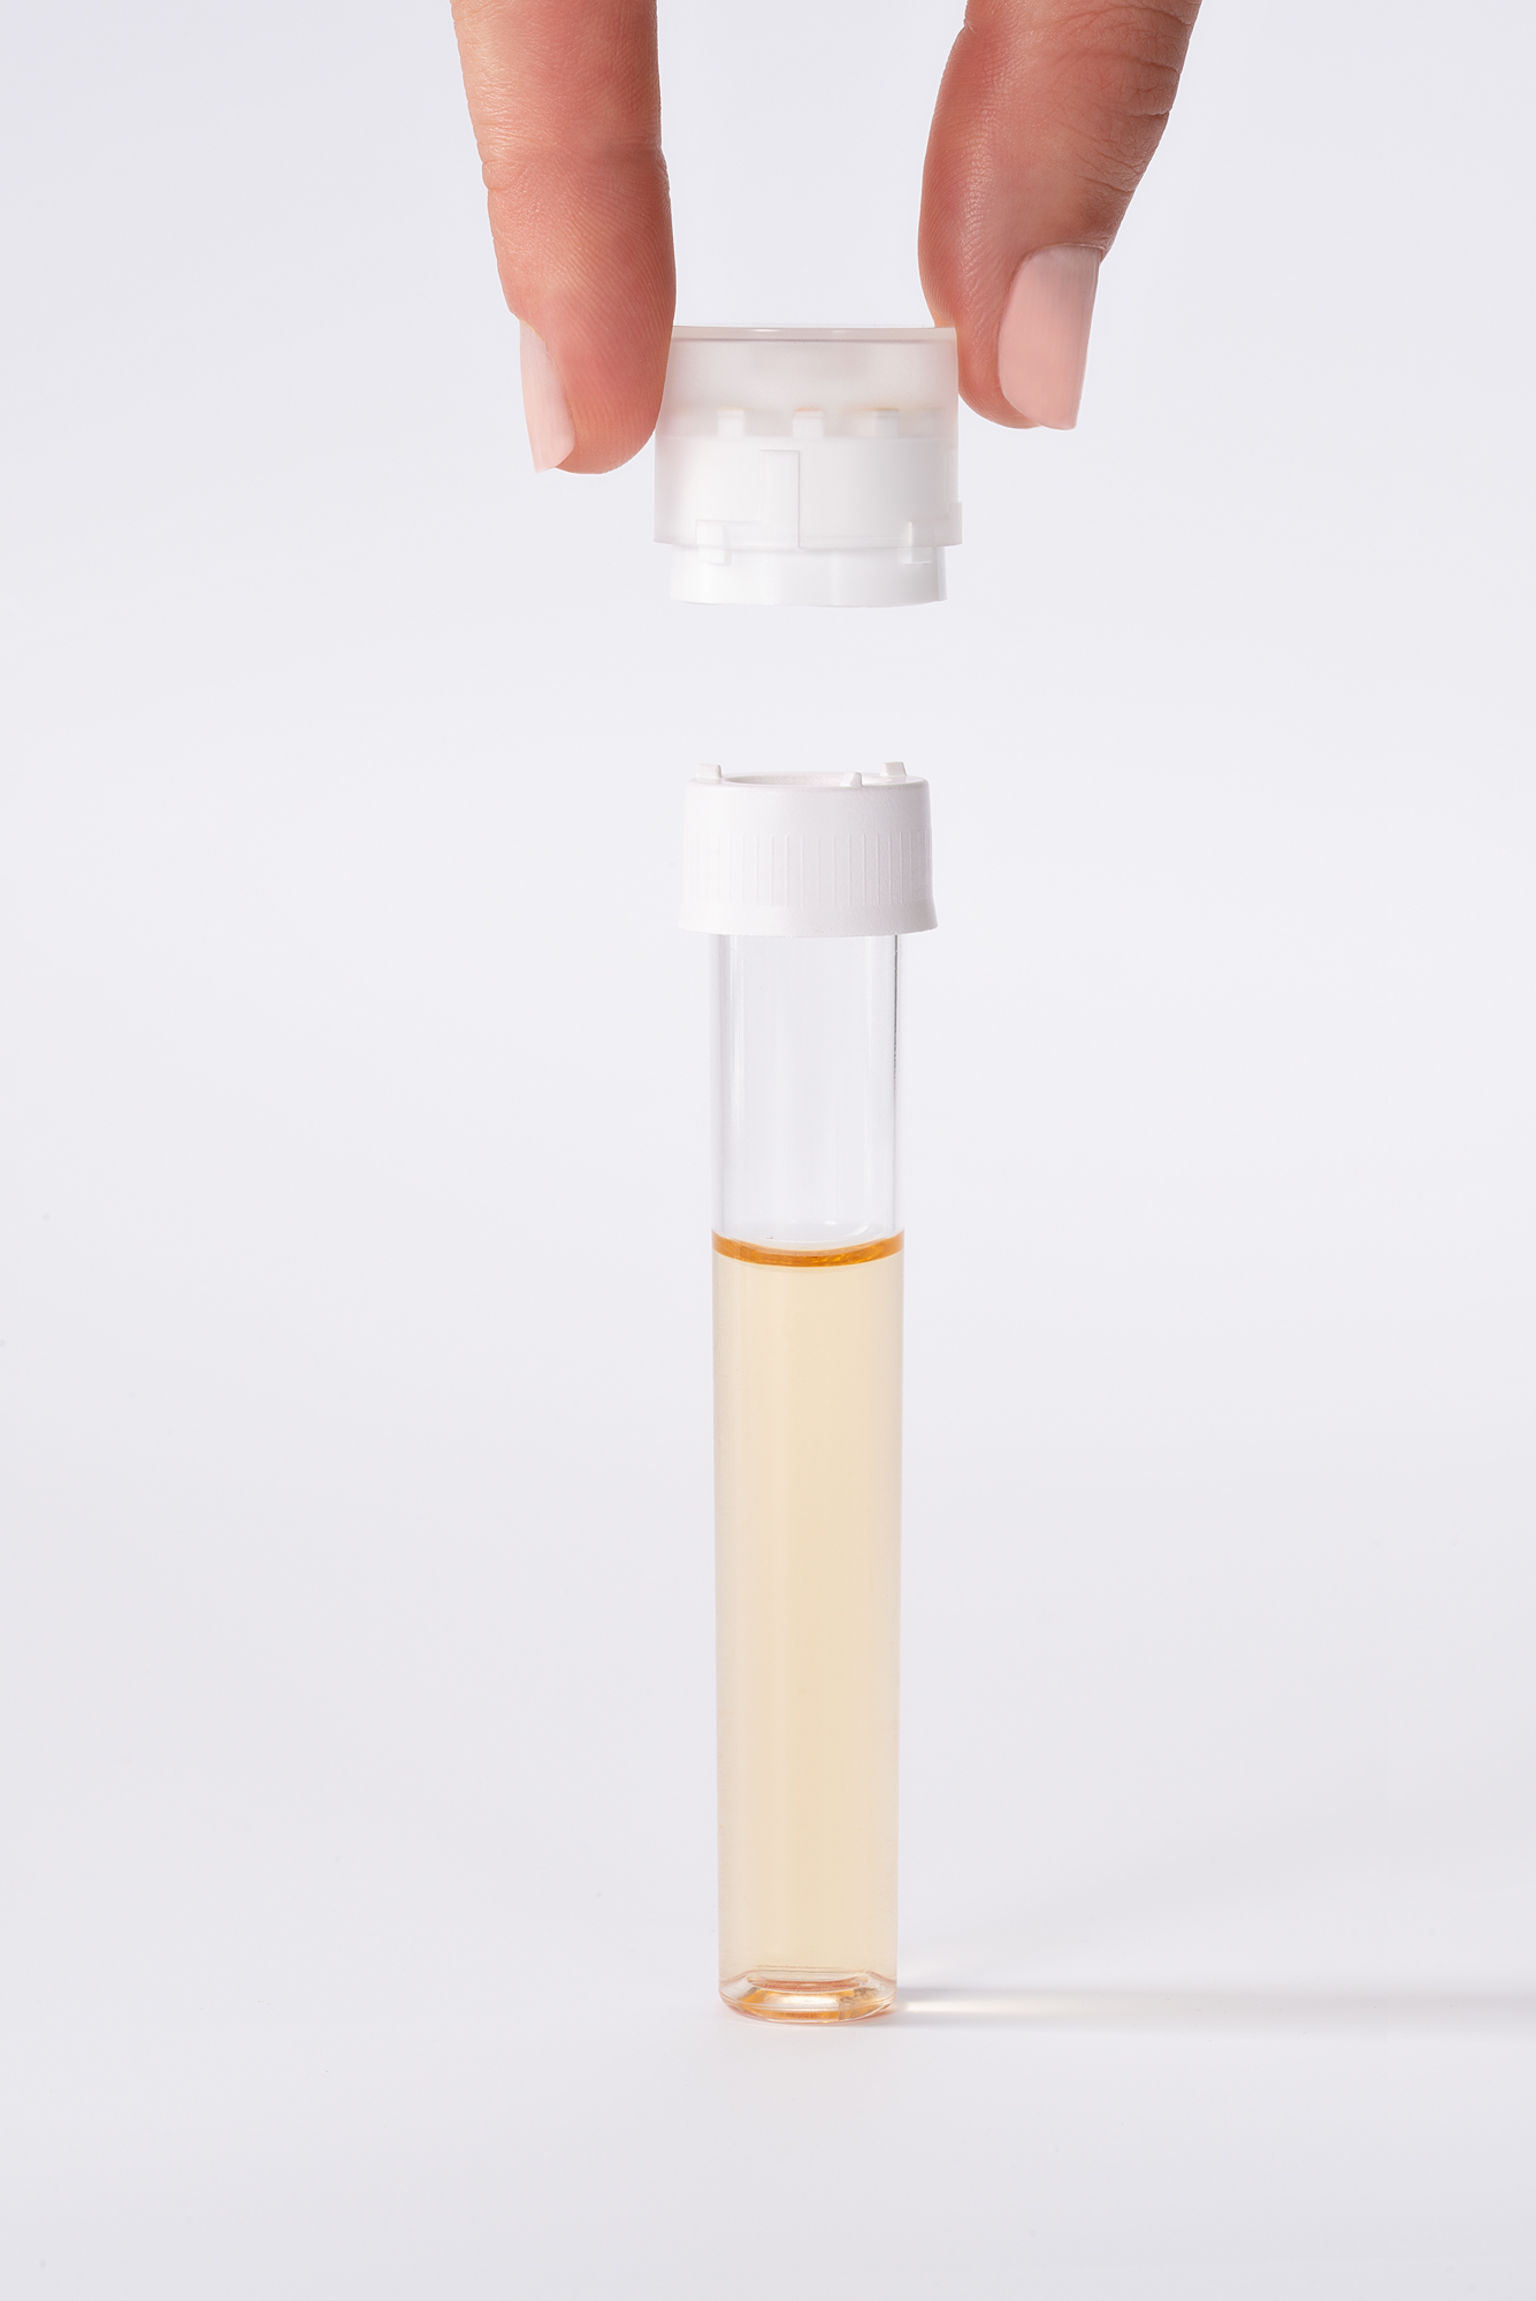 Clinical Design Urine Testing System™